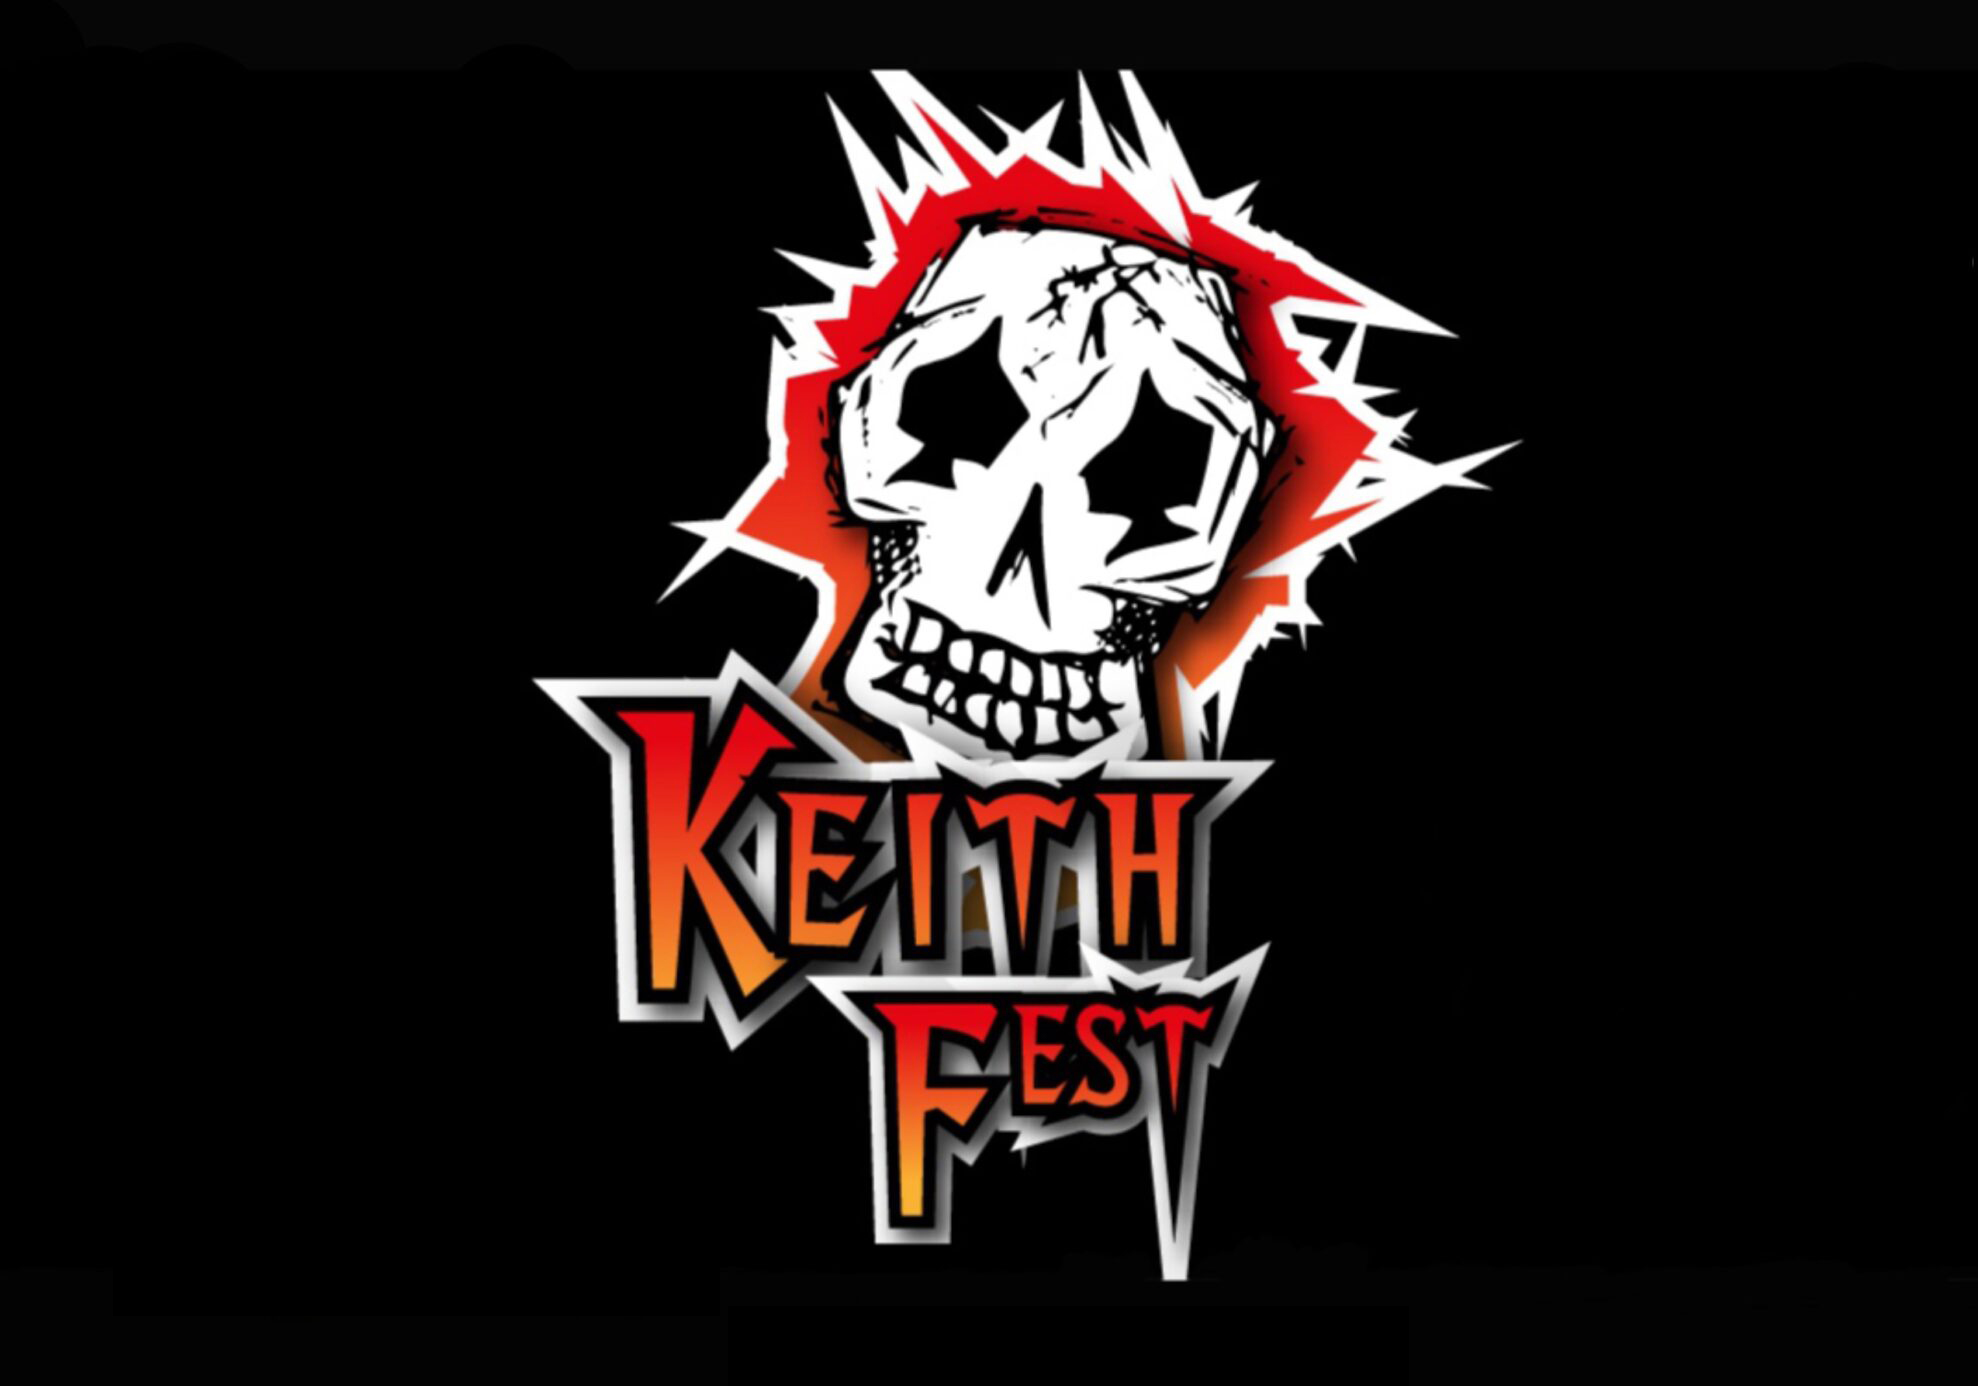 Keith Fest returns to Henstridge Airfield in August